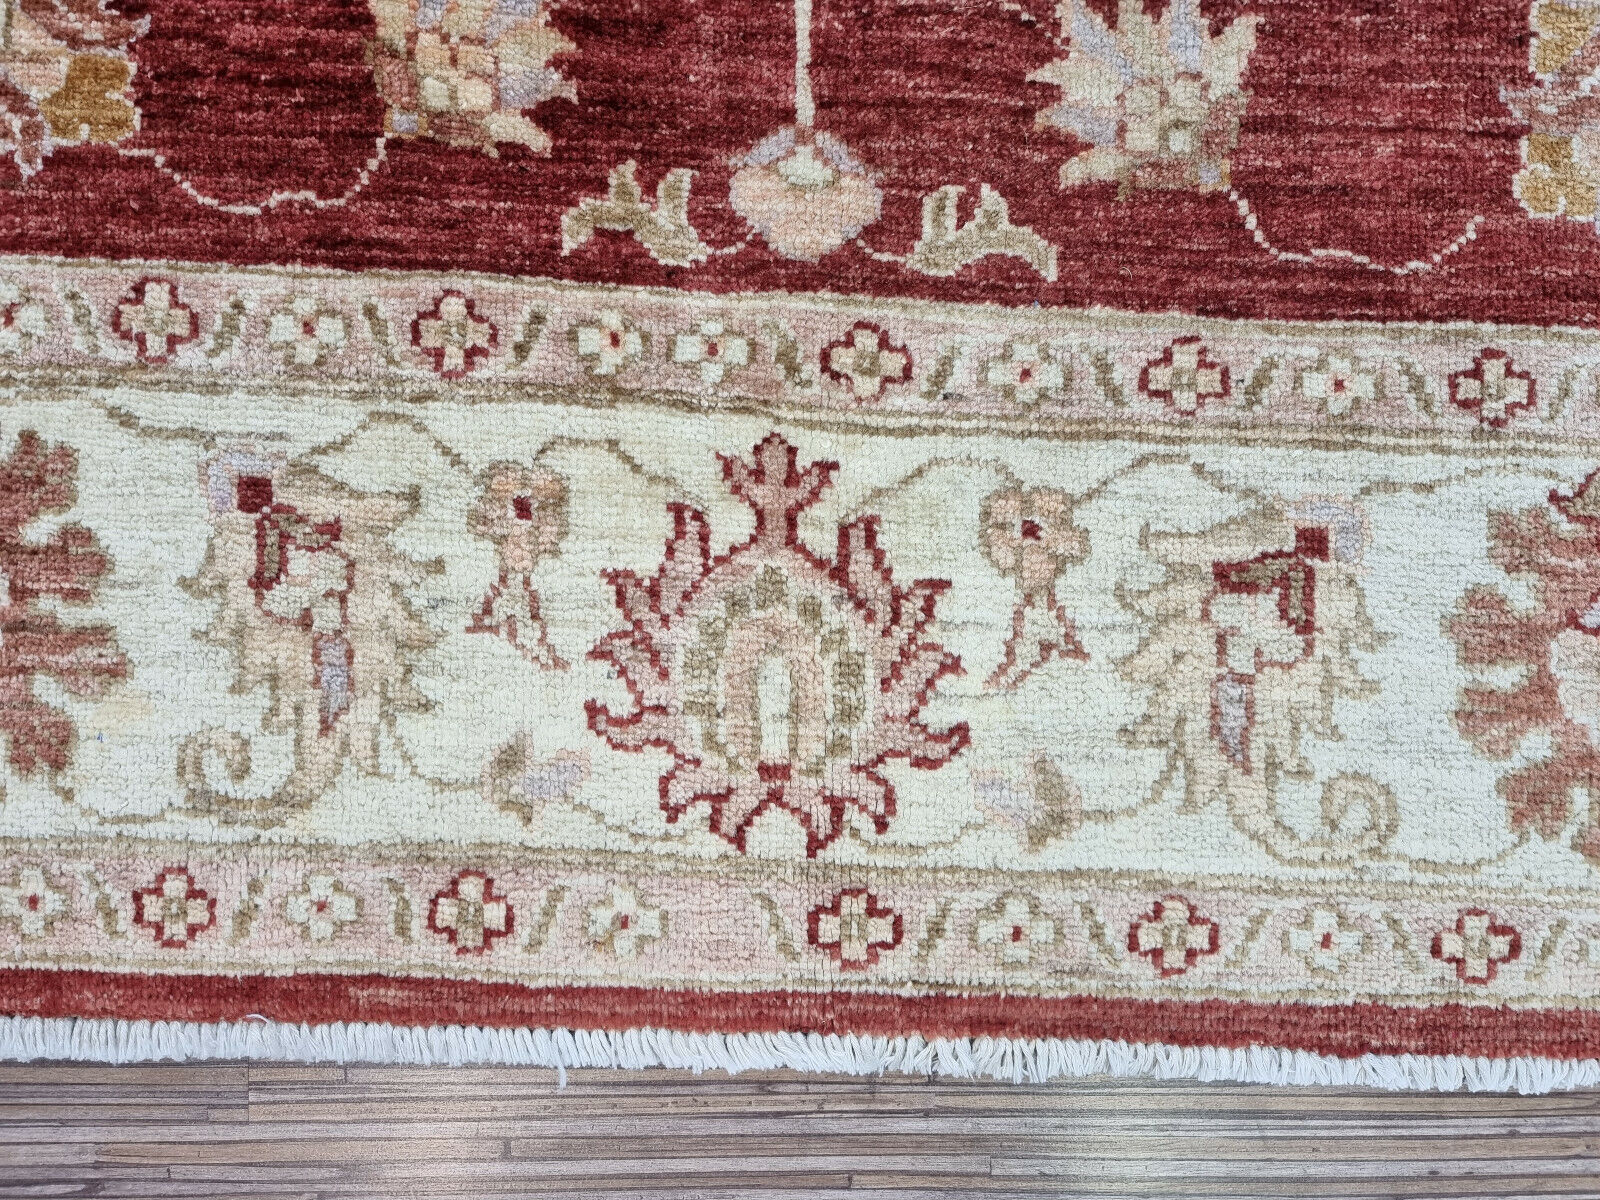 Close-up of geometric motifs on Handmade Vintage Afghan Zigler Rug - Detailed view highlighting the geometric motifs integrated into the rug's design.